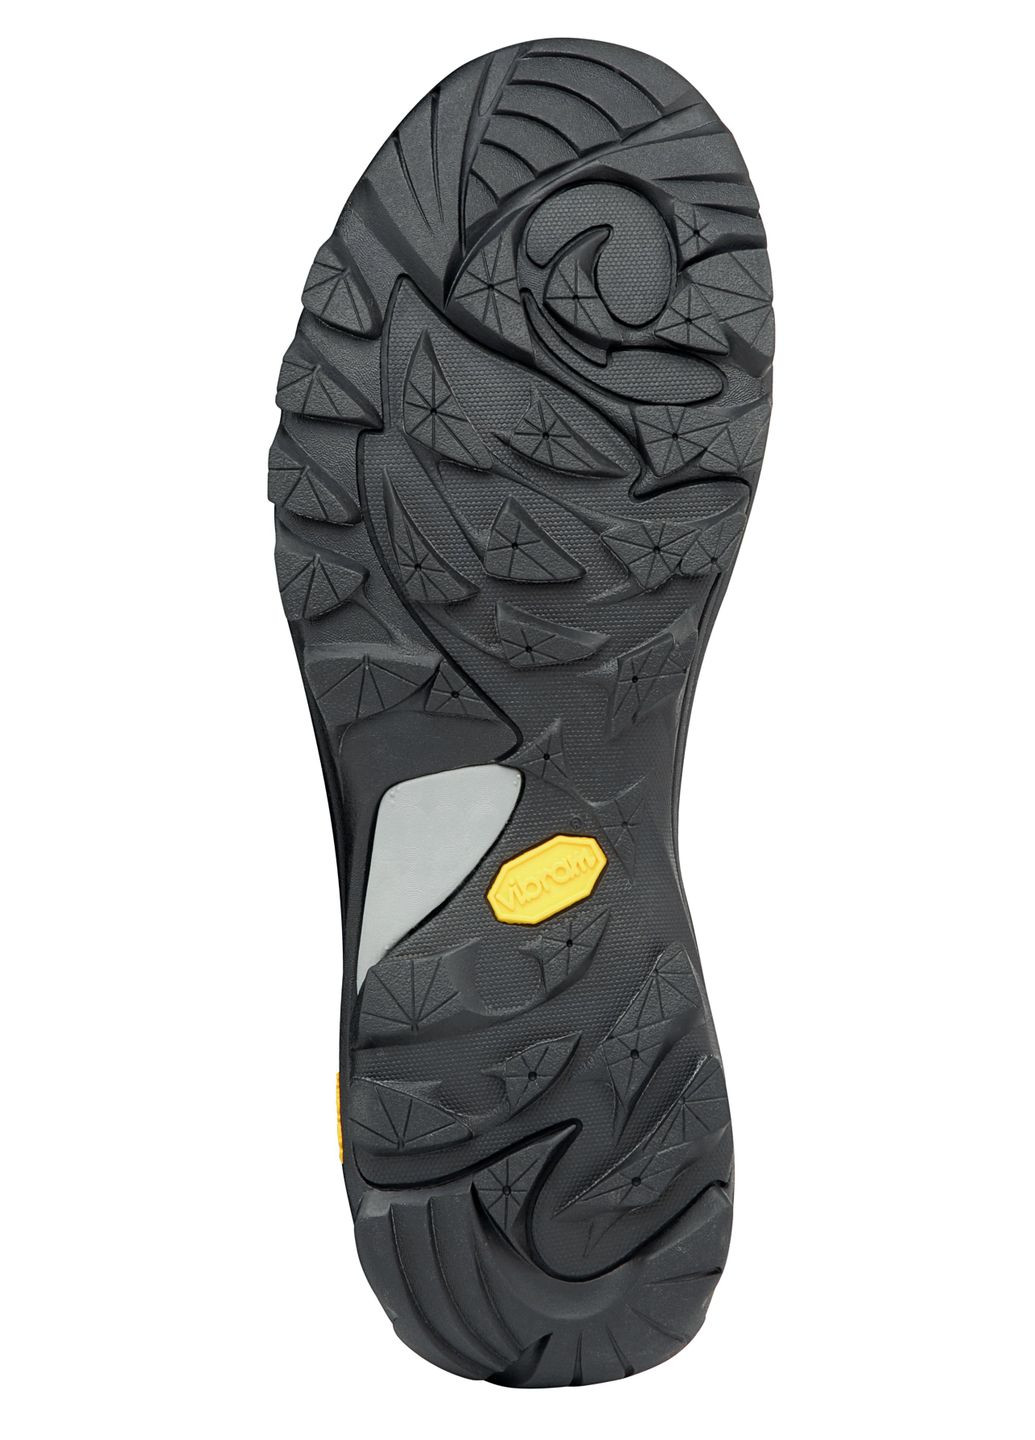 Черные осенние ботинки new trail lite evo gtx Zamberlan